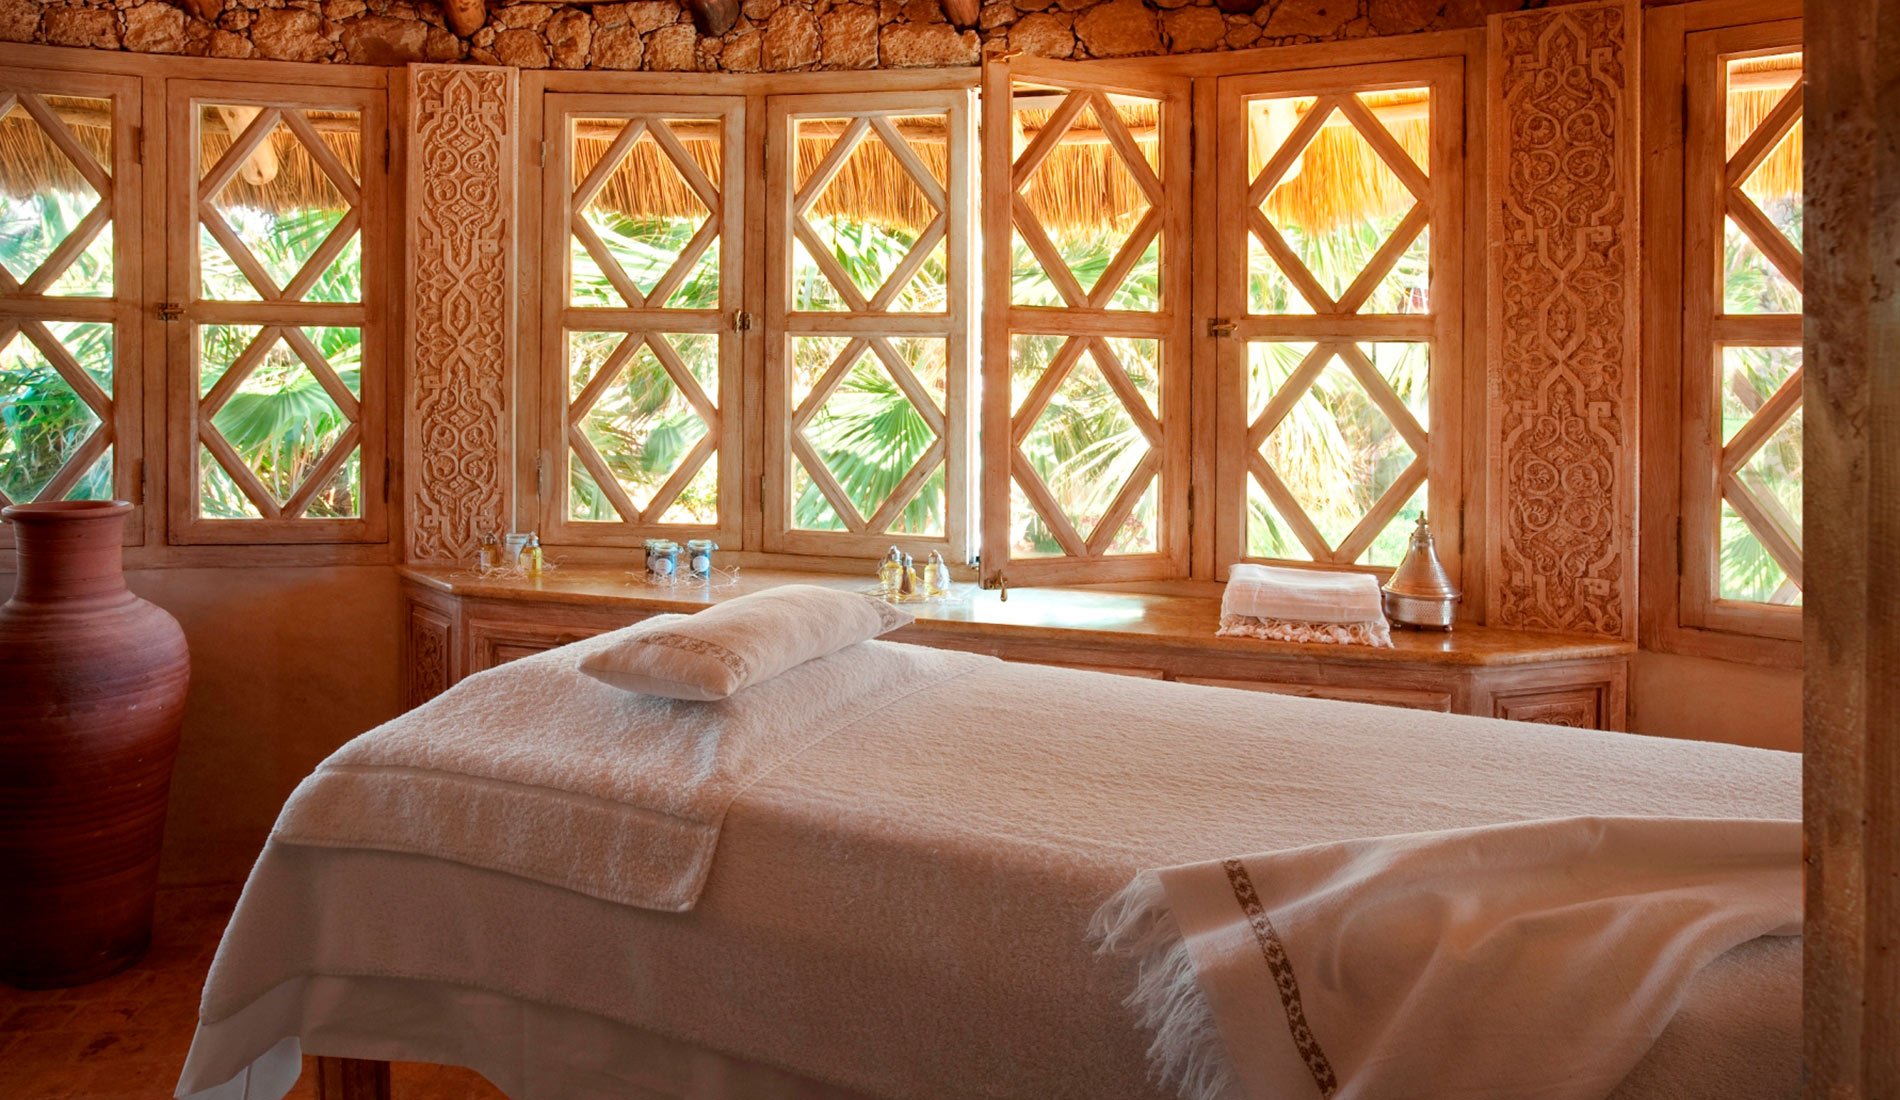 Luxury hotel La Sultana Oualidia 5 star Africa Morocco Oualidia spa massage